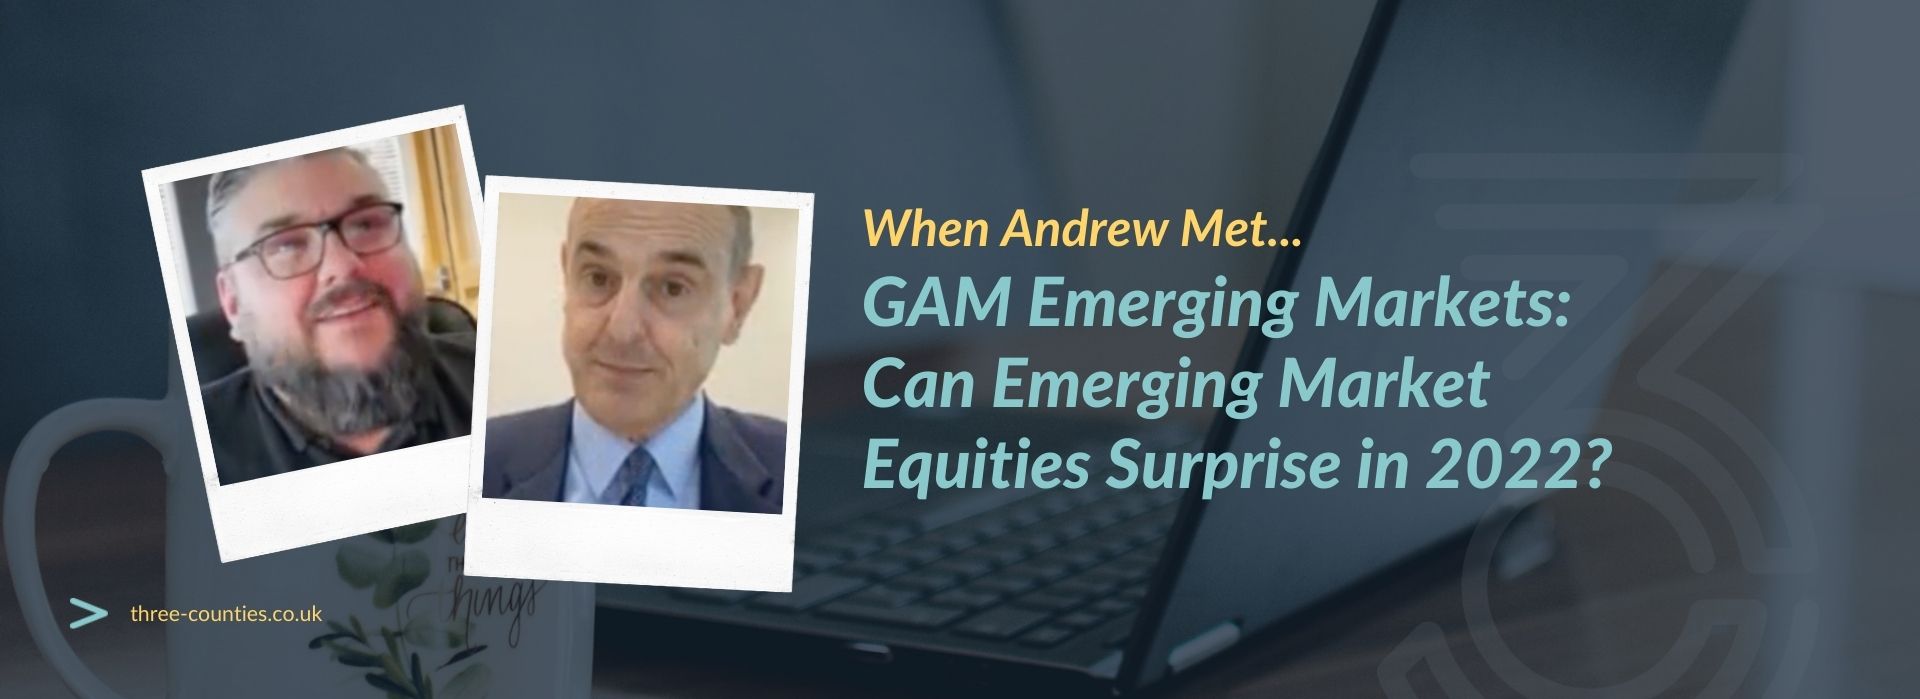 When Andrew Met... GAM Emerging Markets Equity: Can Emerging Market Equities Surprise in 2022?